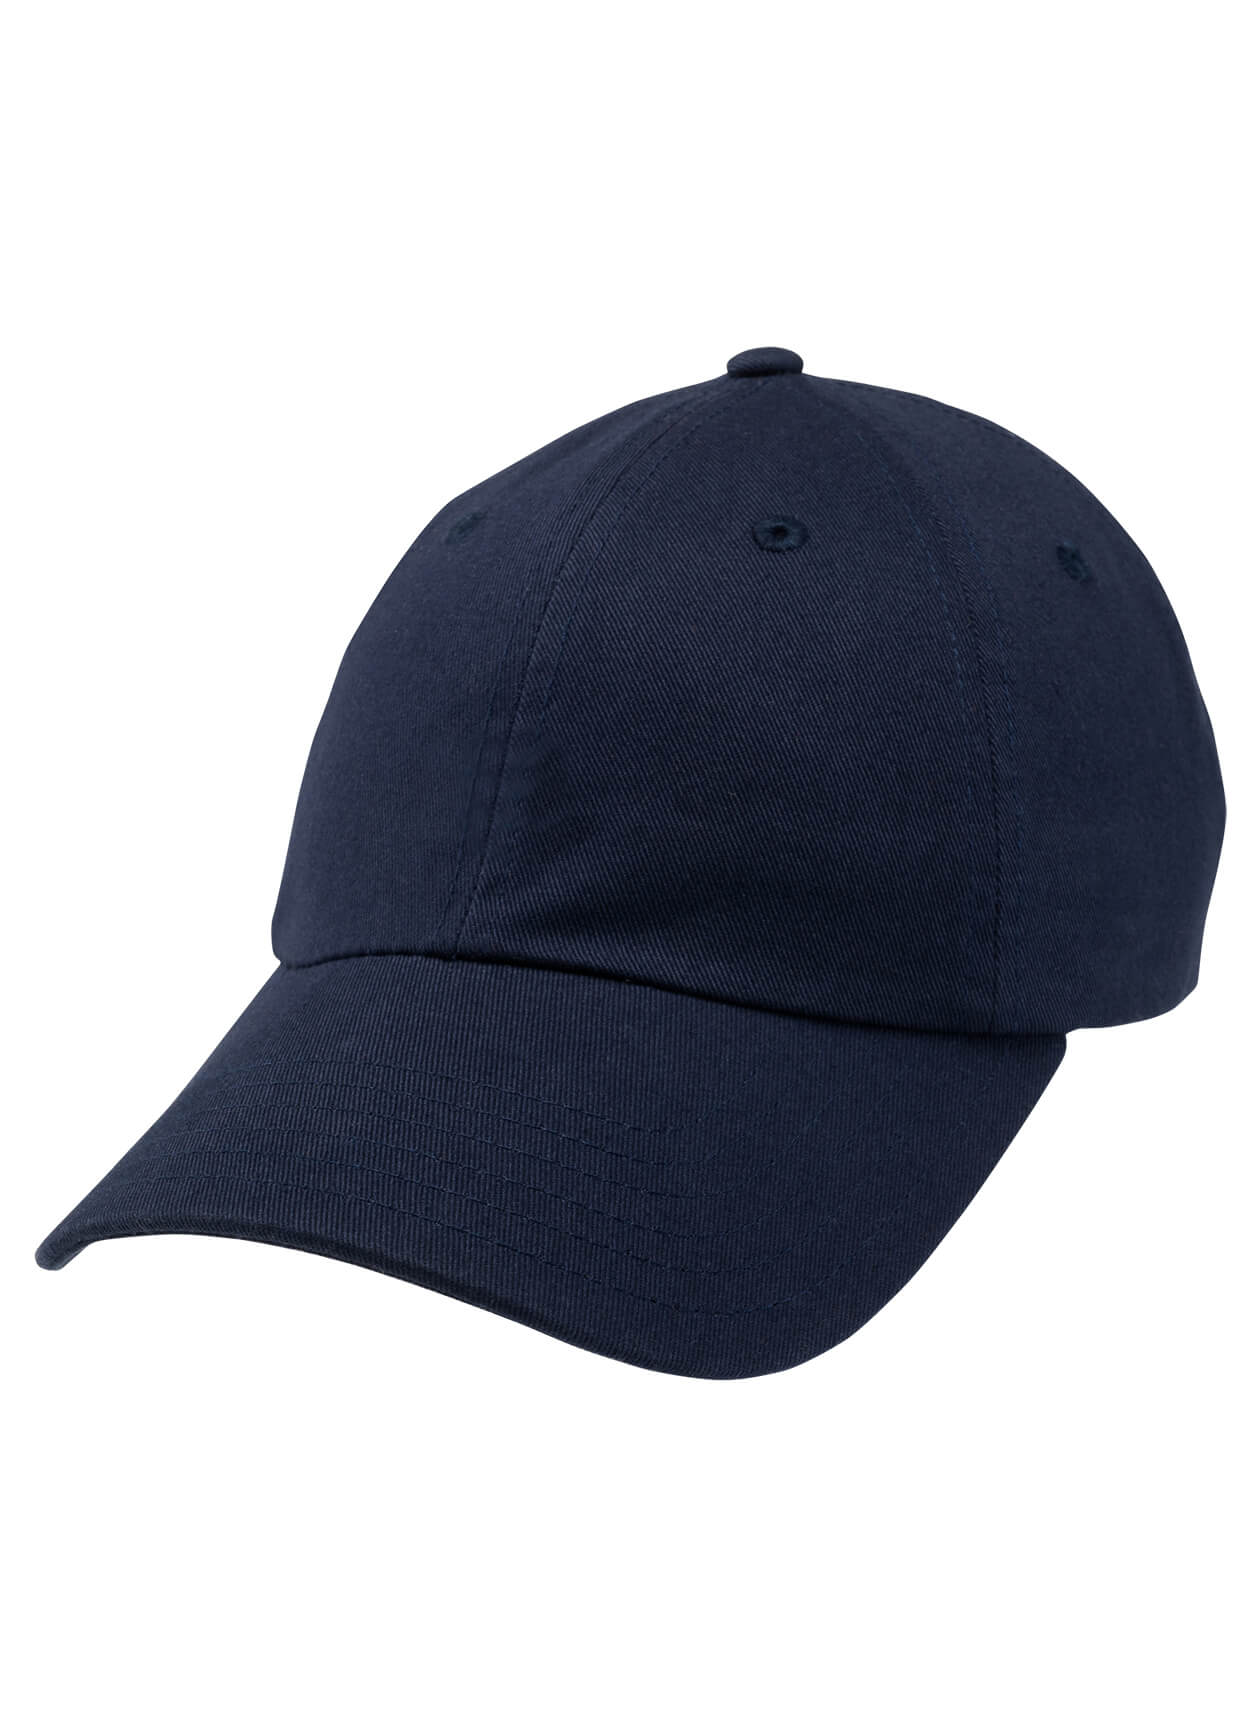 Southern Tide 4384 - Cotton Hat